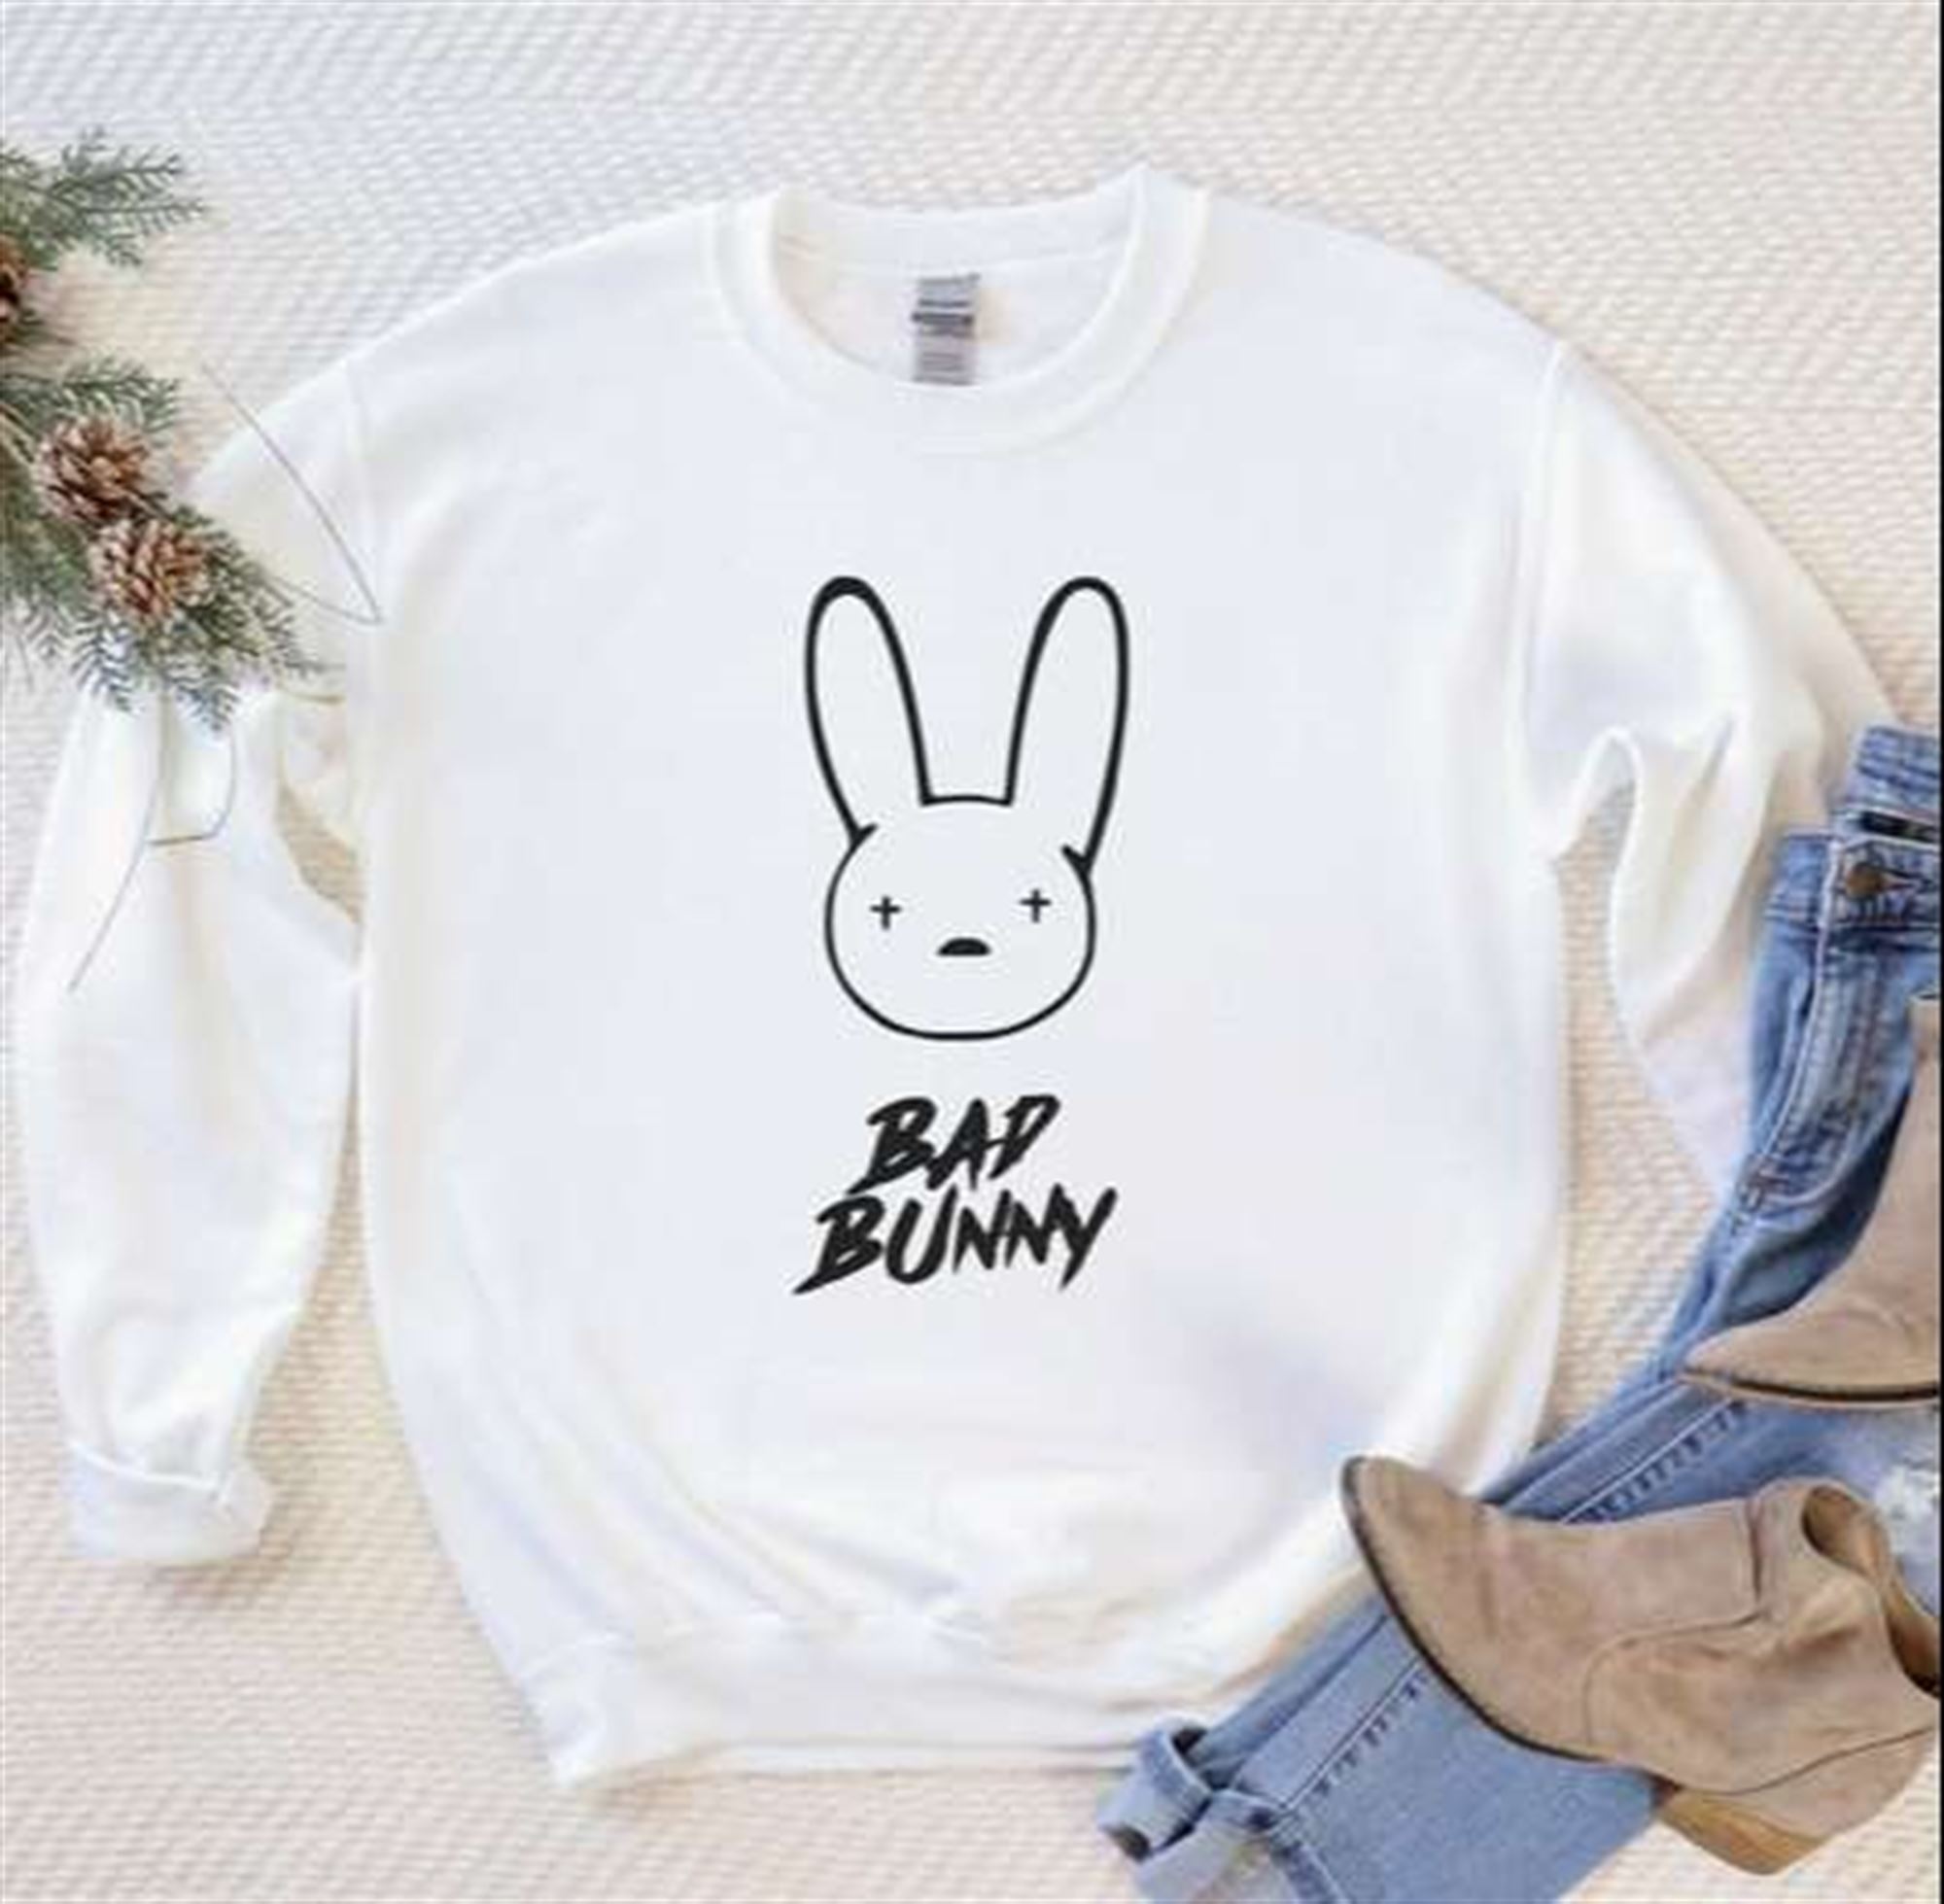 Bad Bunny Sweatshirt T Shirt Plus Size Up To 5x